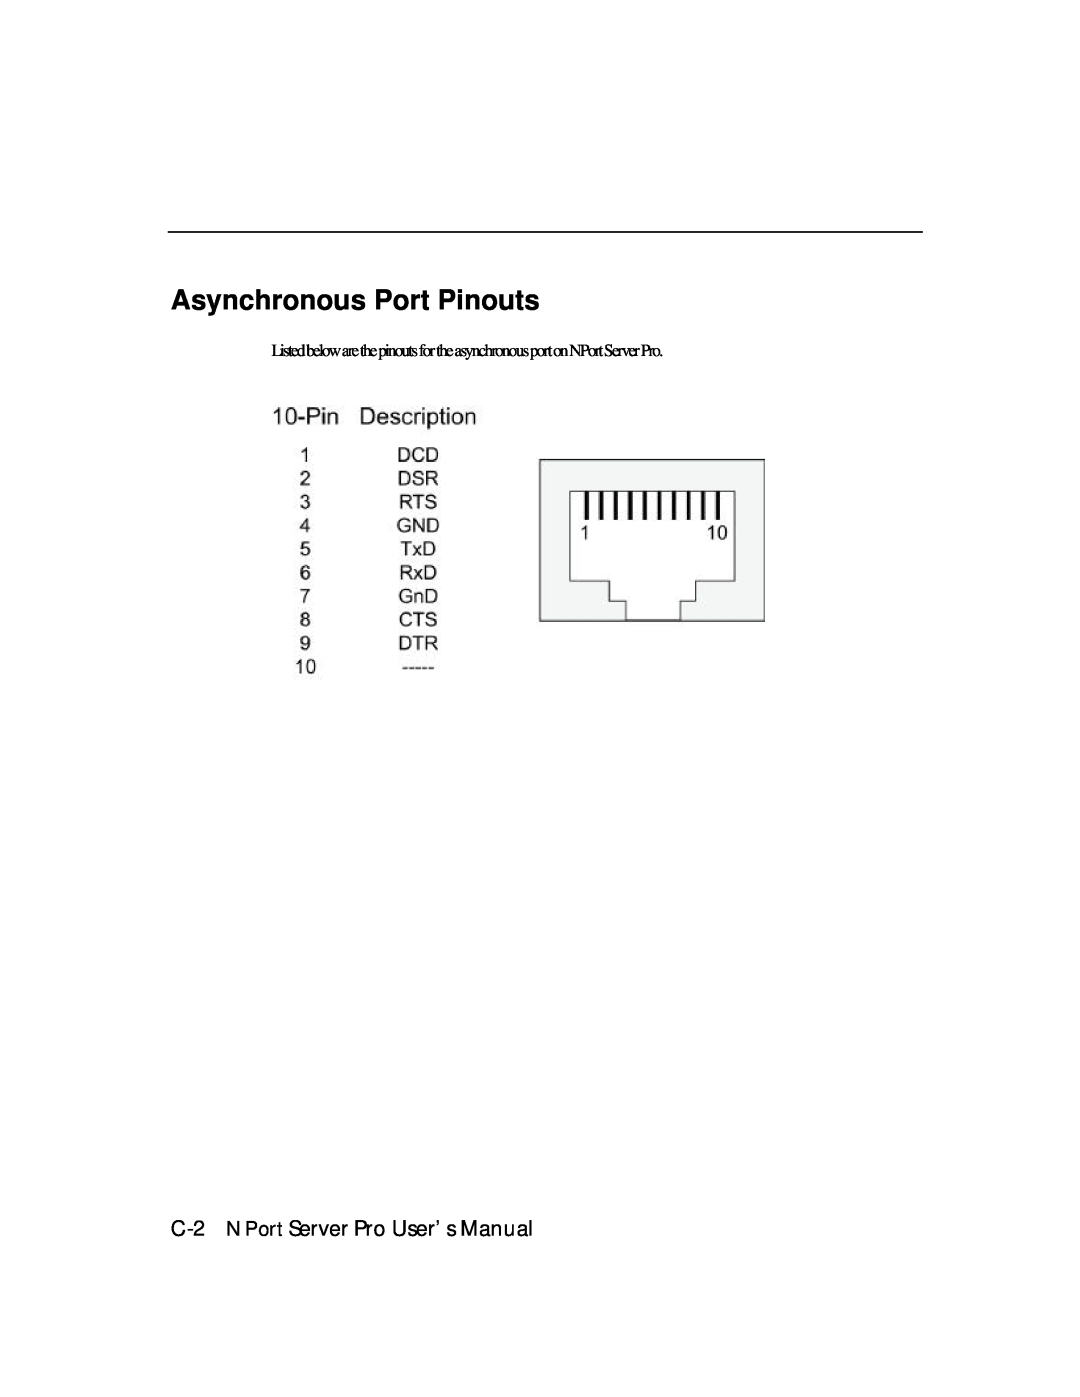 Moxa Technologies DE-303, DE-308 manual Asynchronous Port Pinouts, C-2 NPort Server Pro User’s Manual 